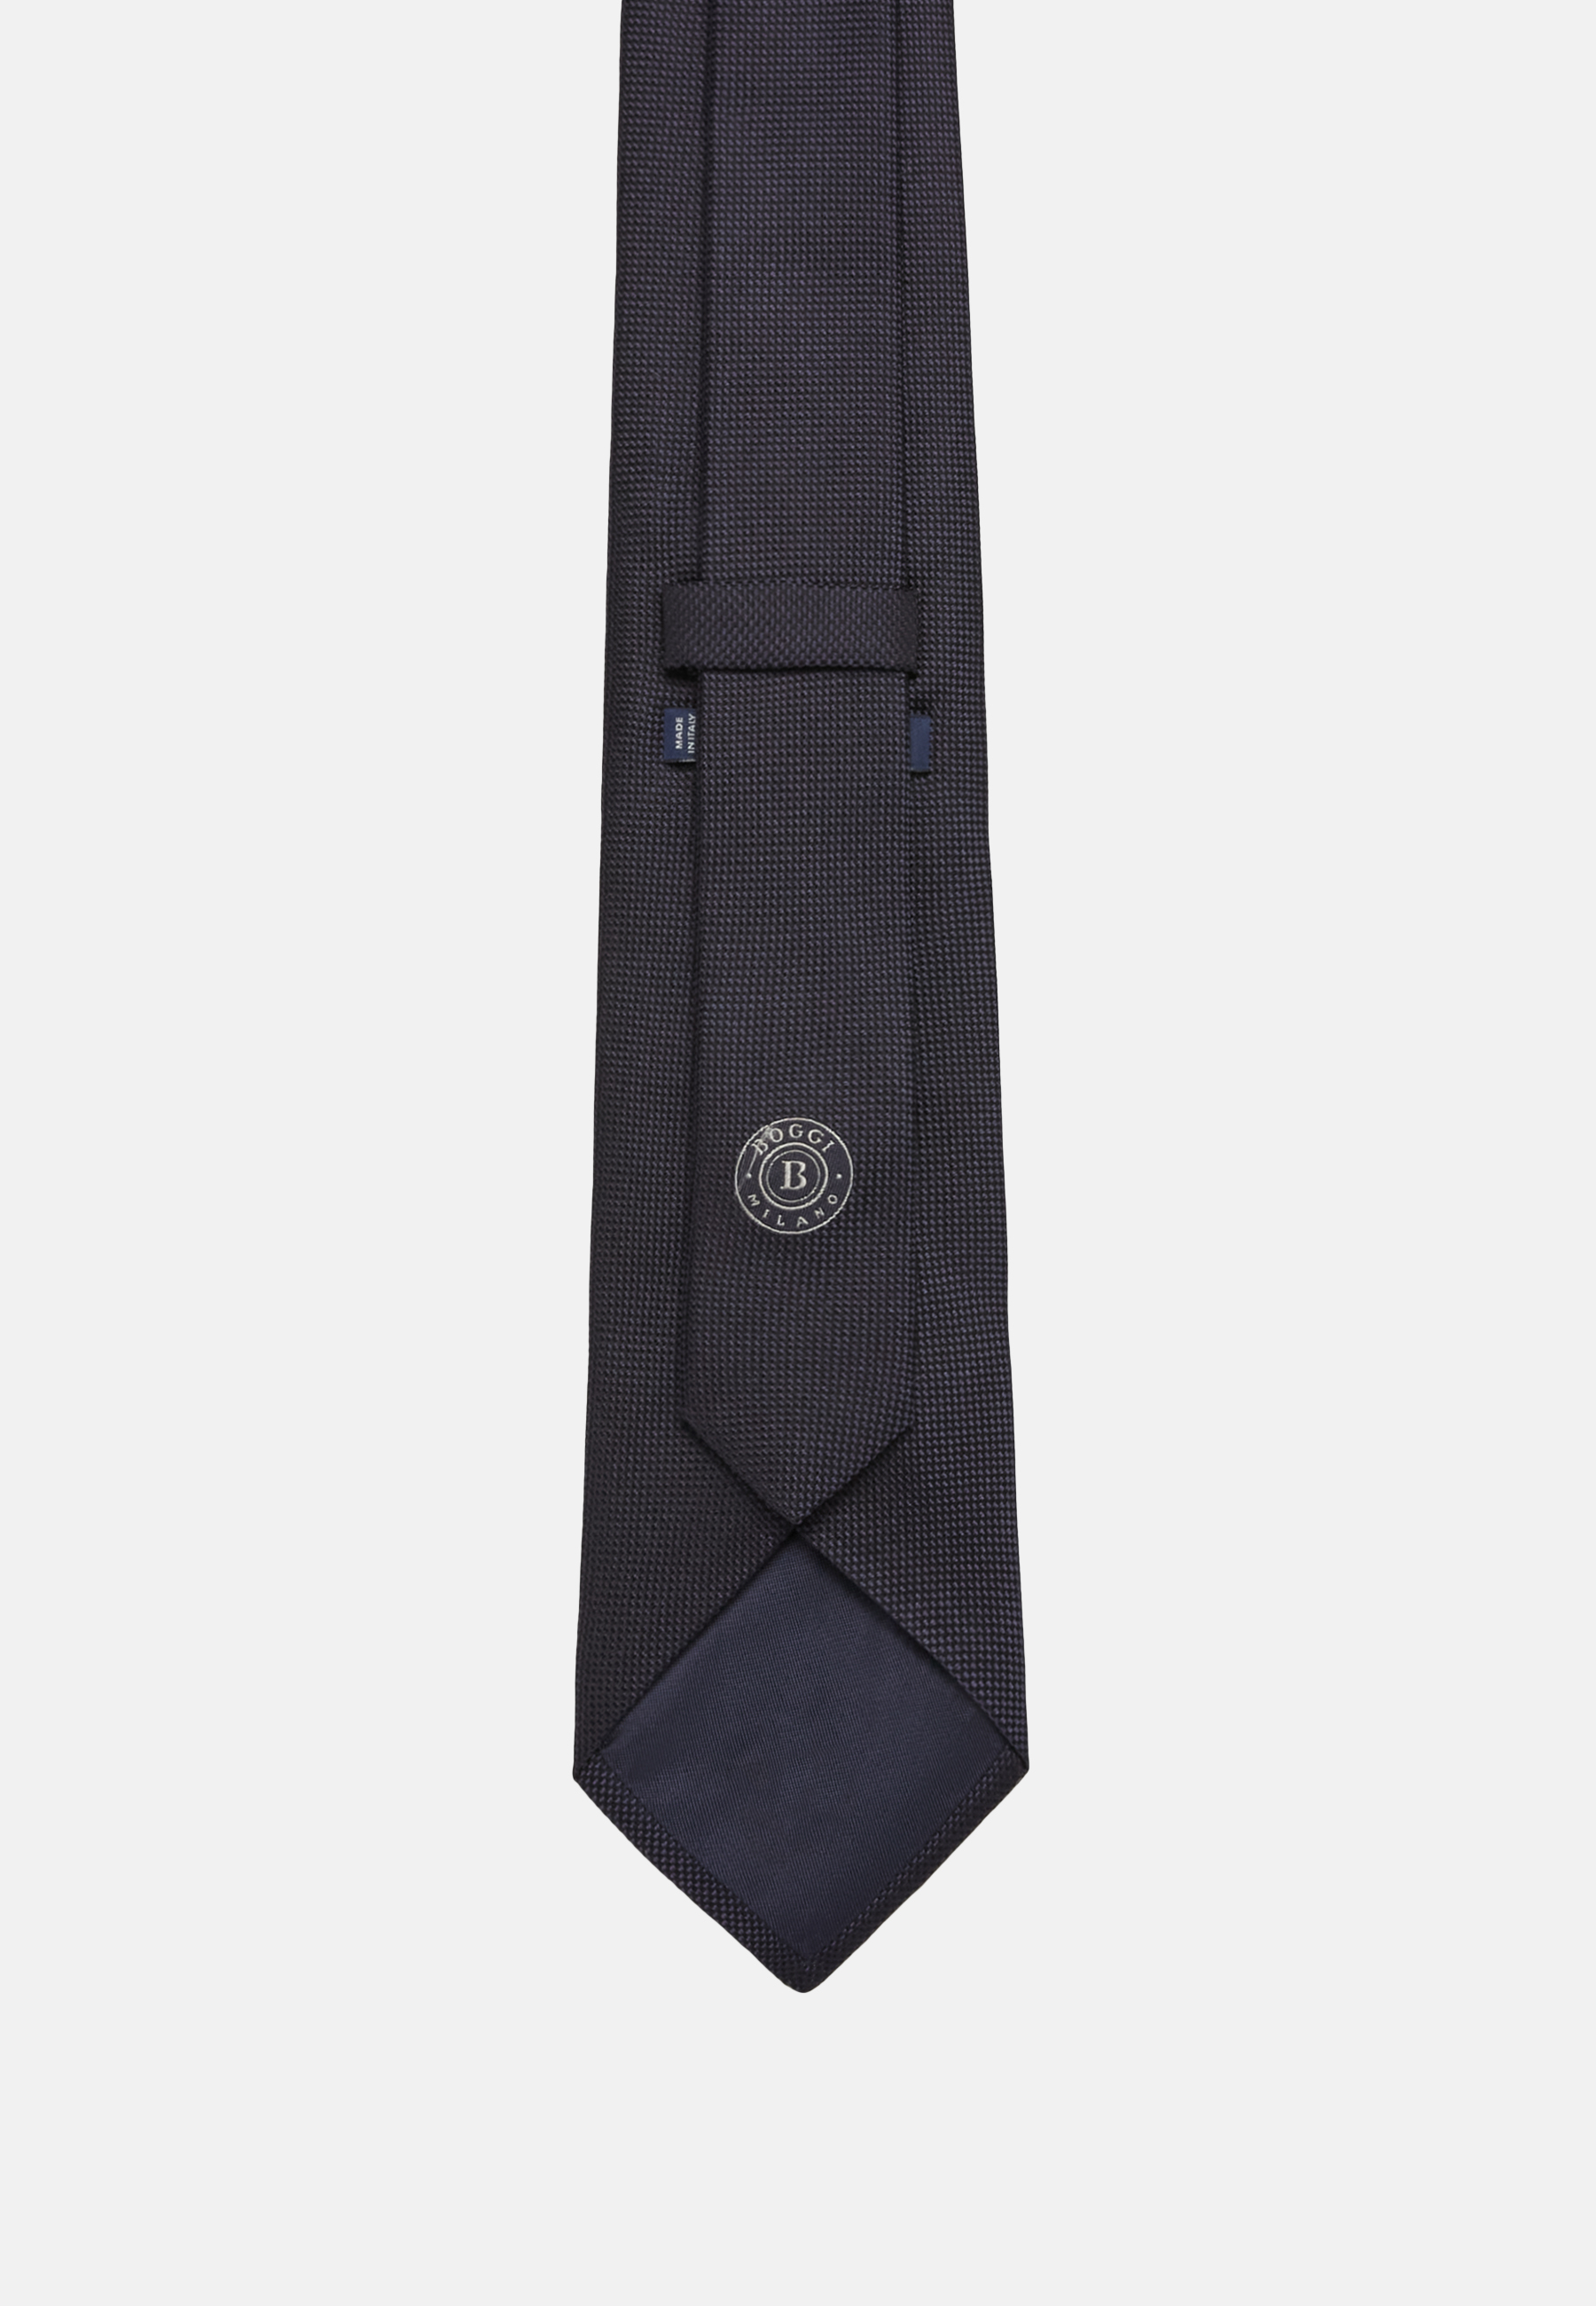 GG silk jacquard tie in dark blue and green